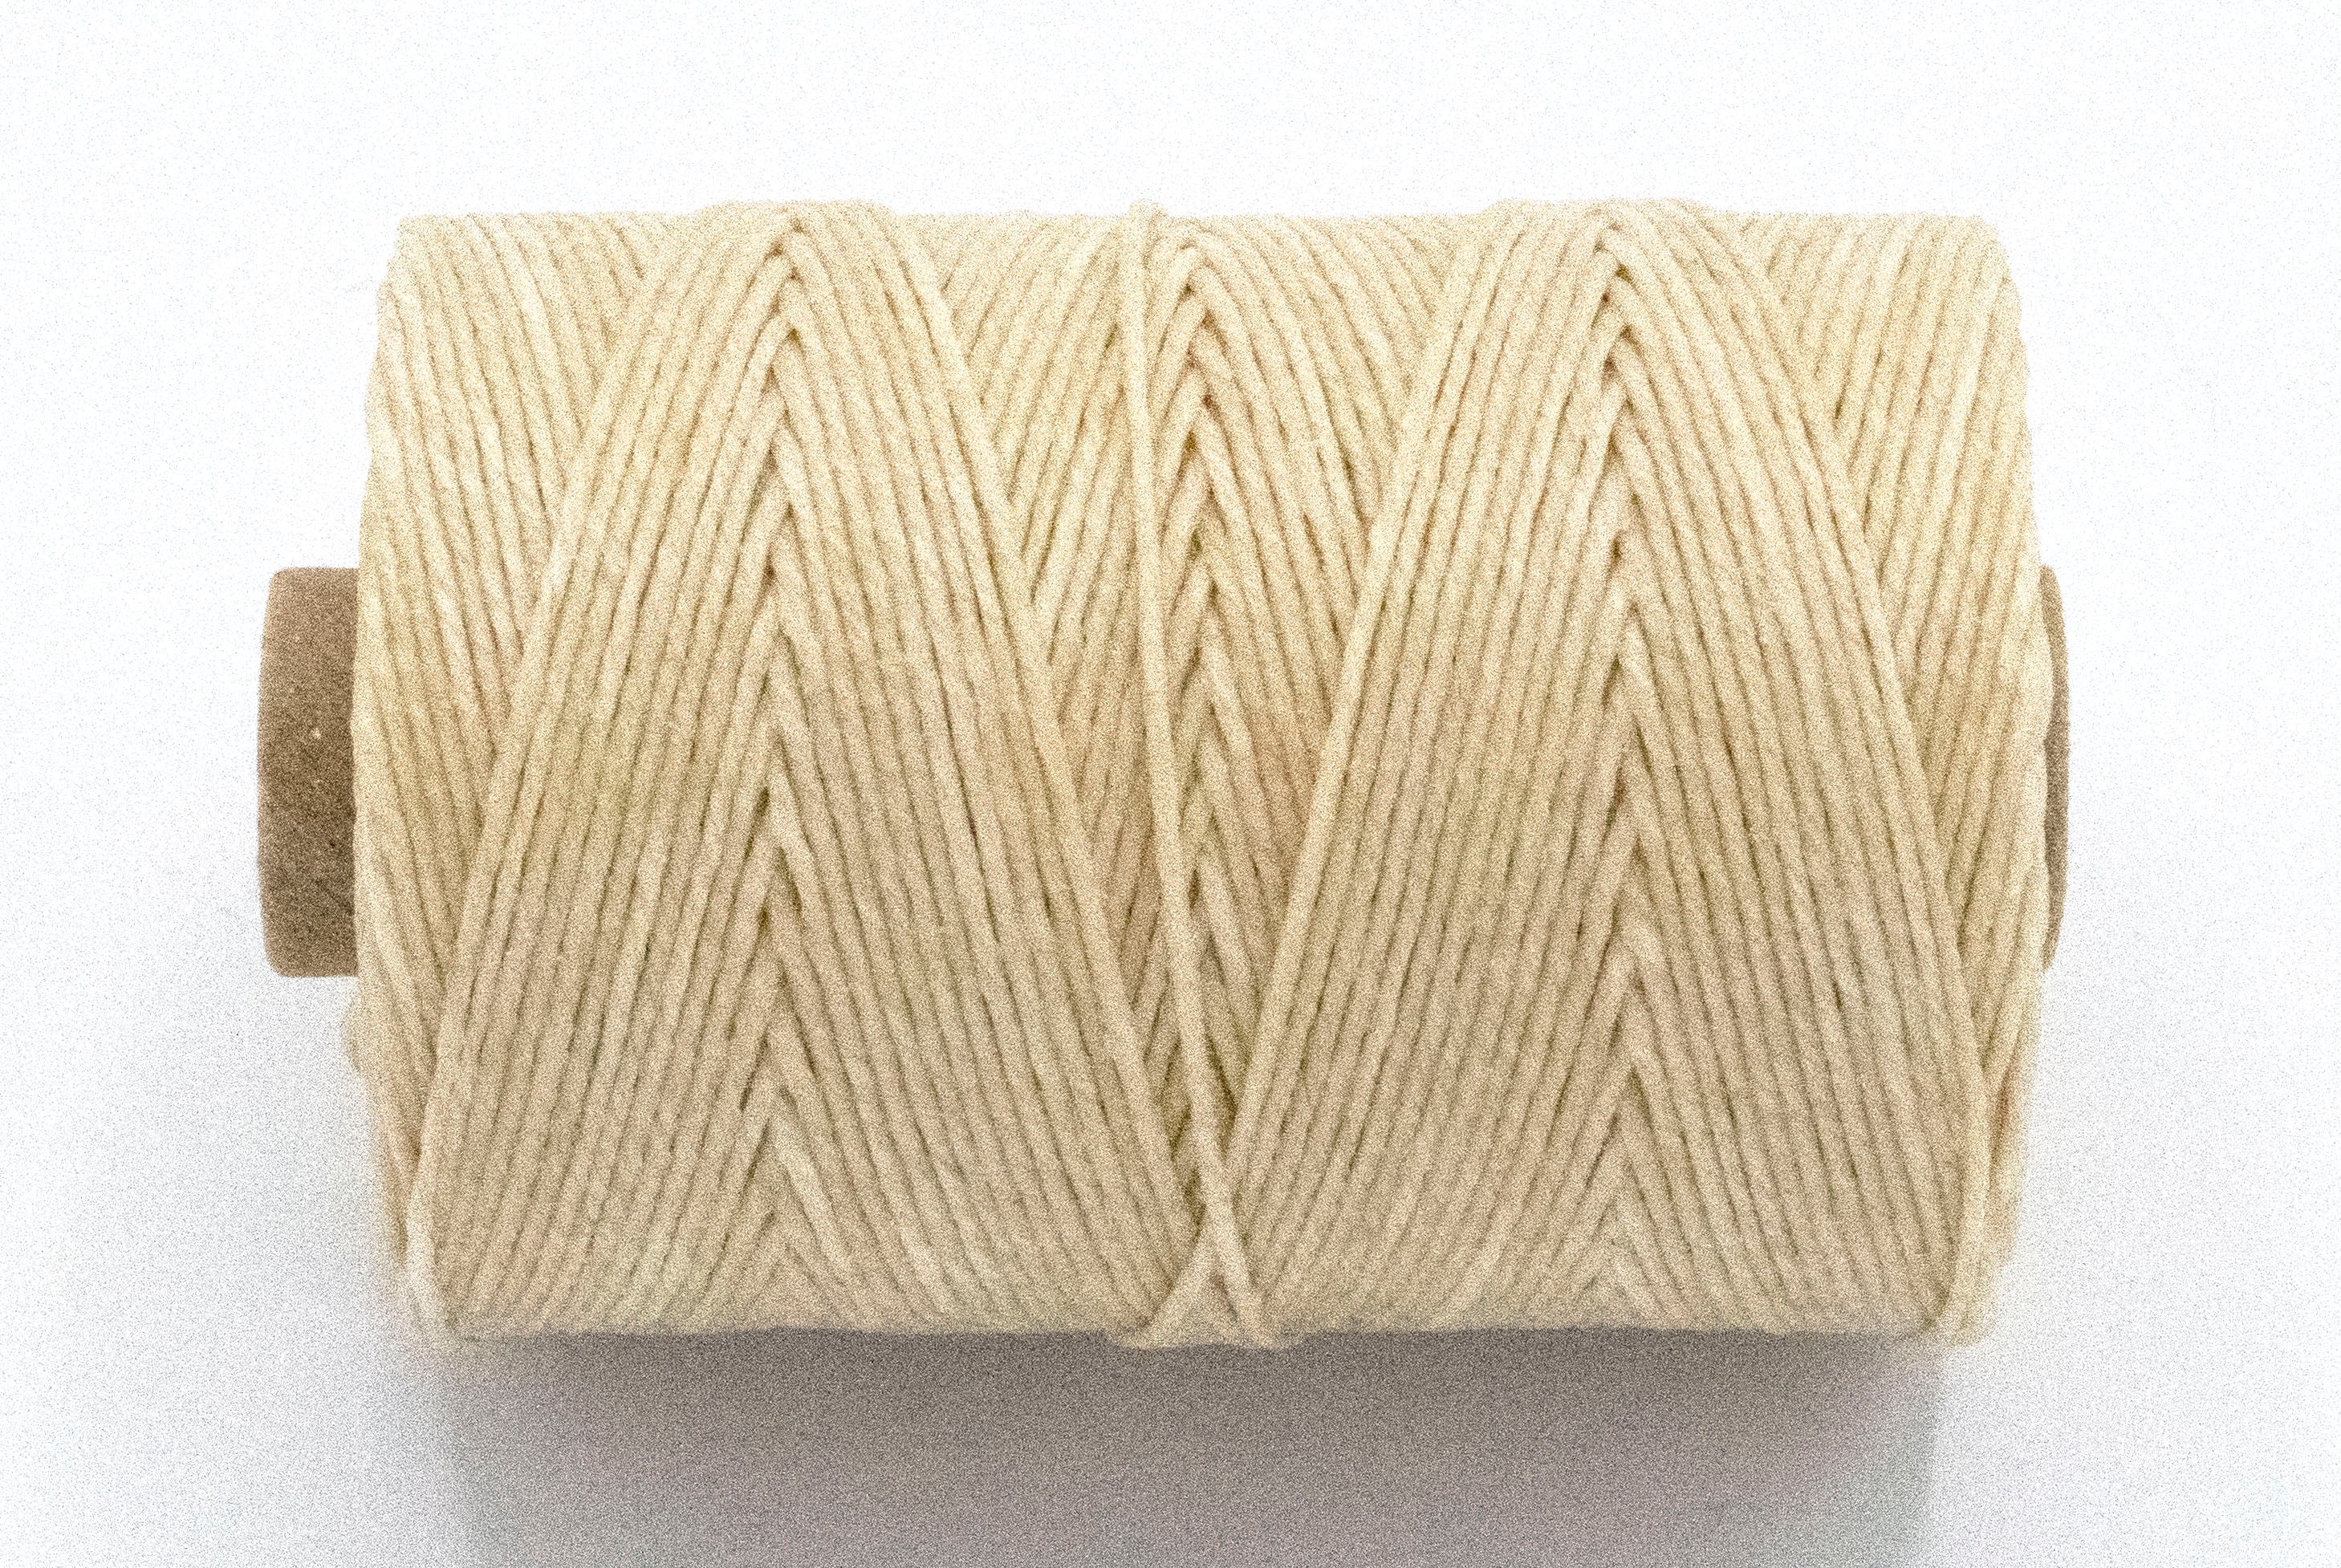 Irish Linen Bookbinding Thread: Unbleached & Colored